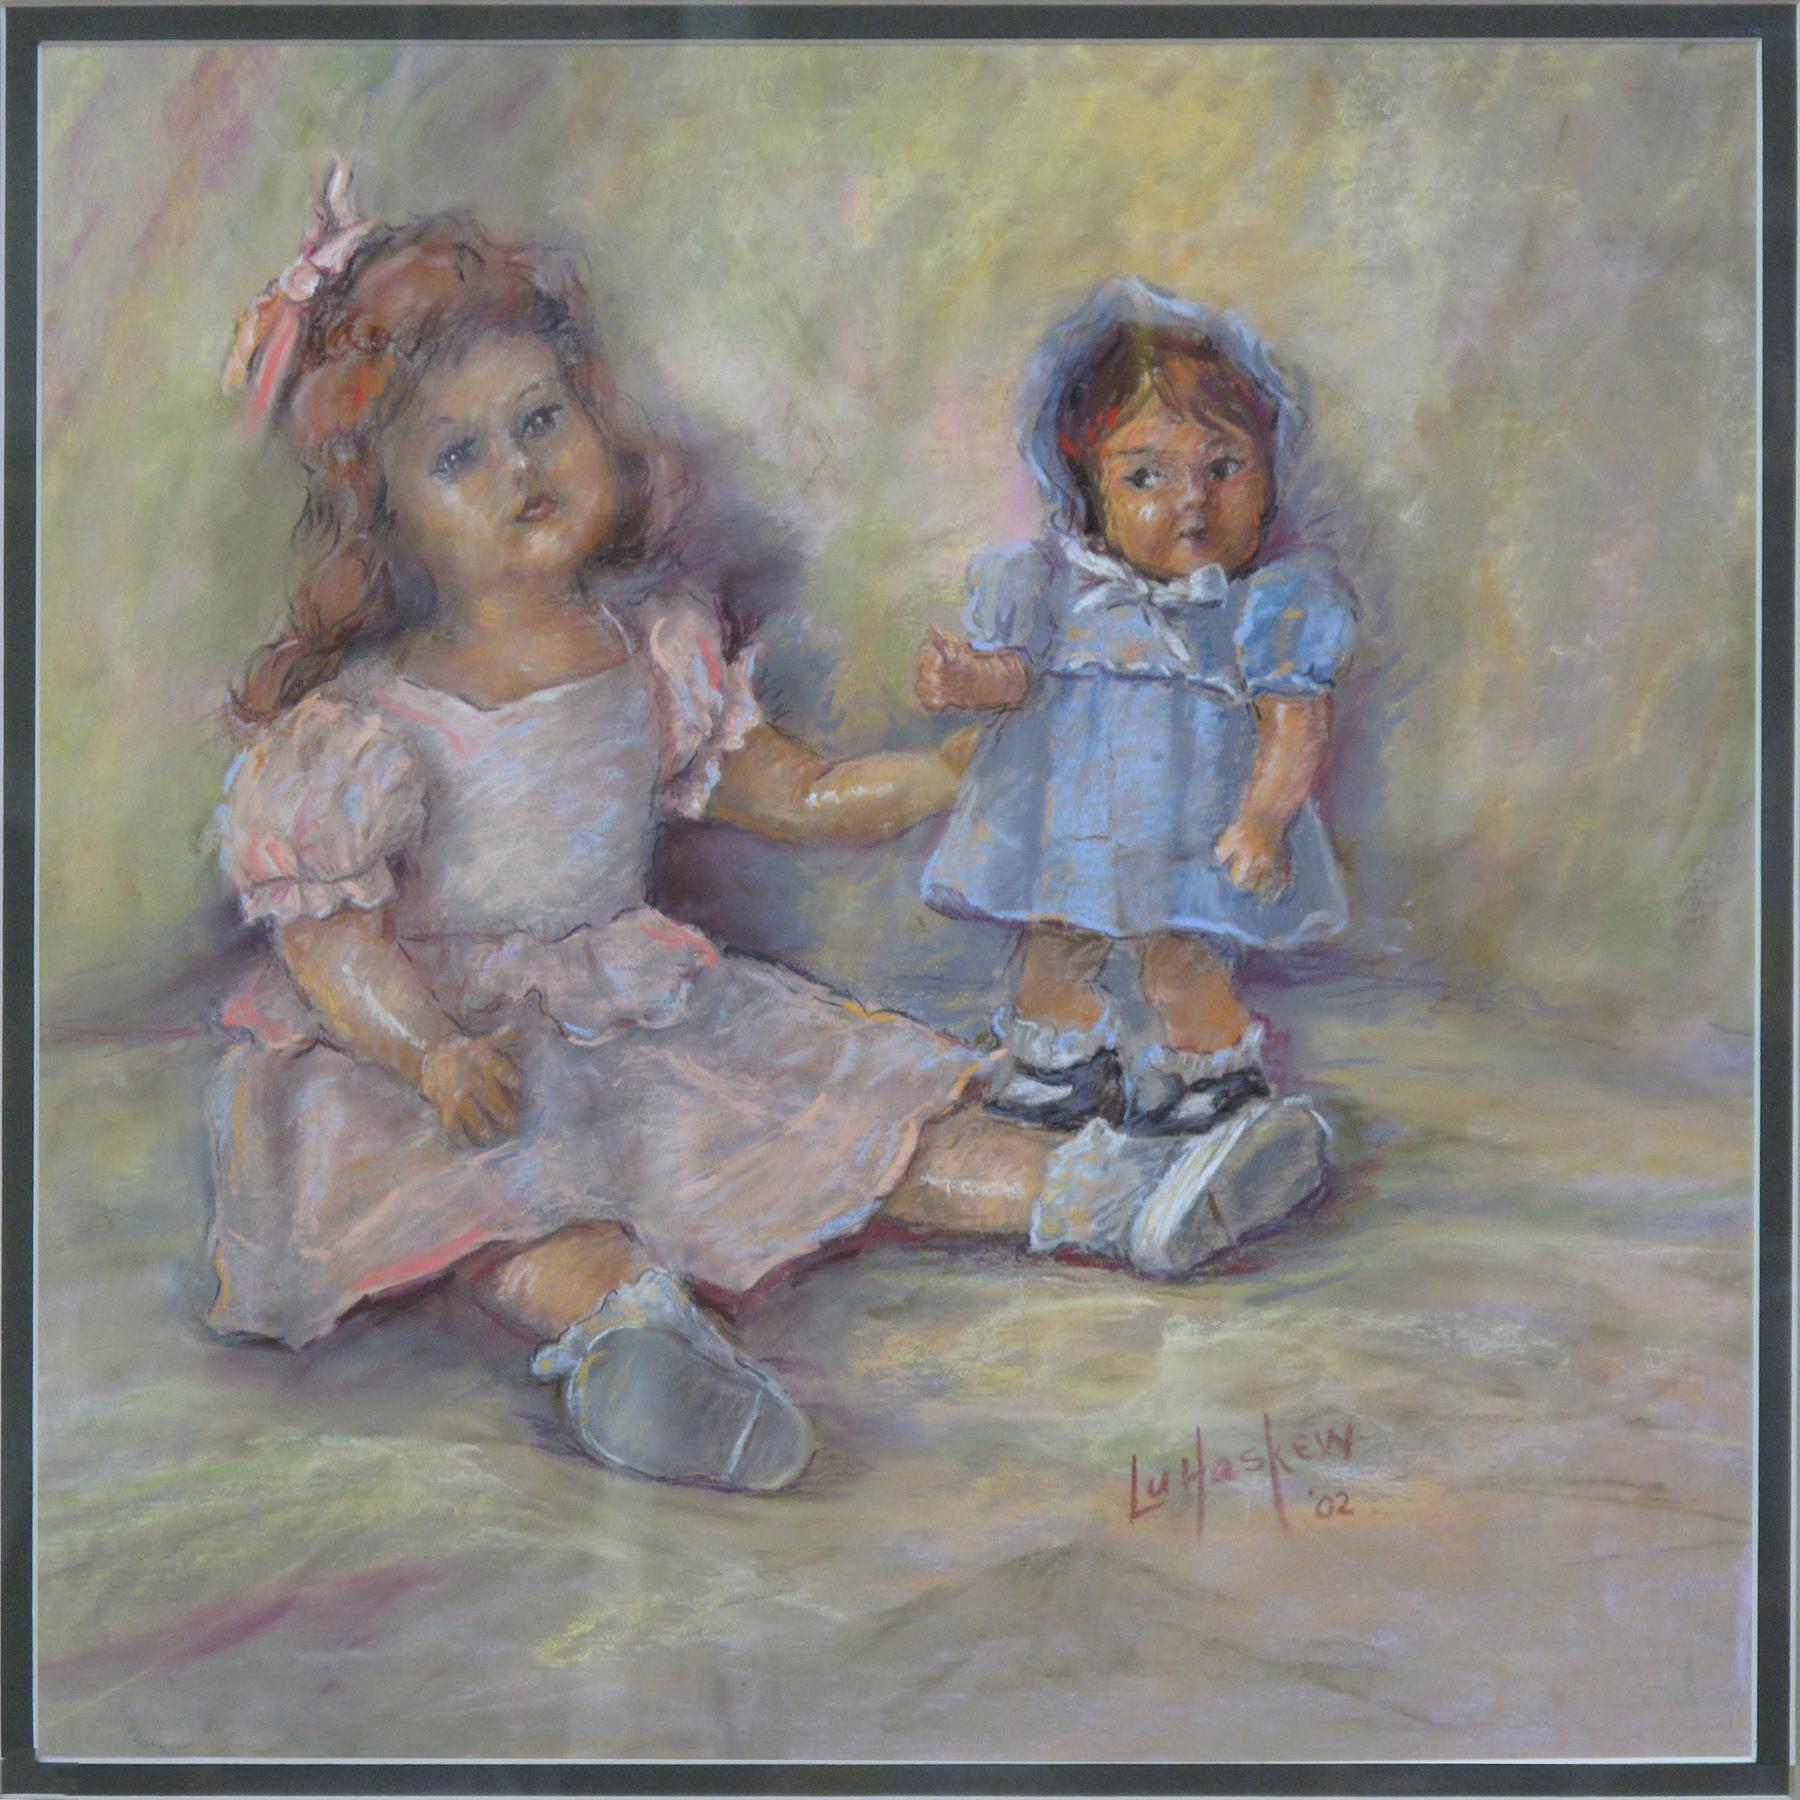 Lu Haskew Figurative Painting - Dolls